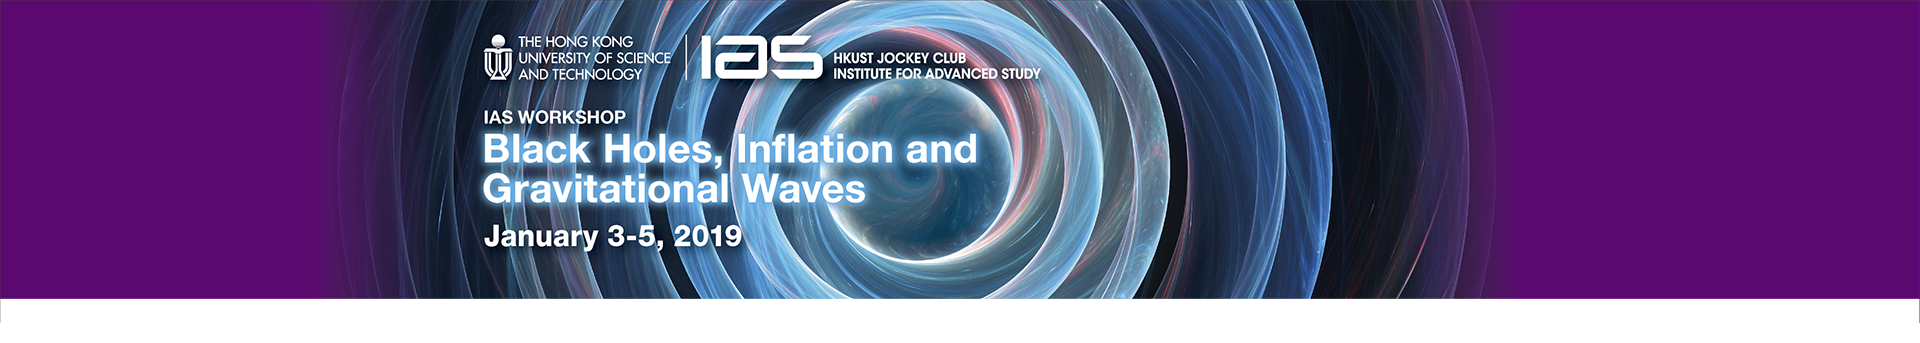 IAS  Workshop on Black Holes, Inflation and Gravitational Waves